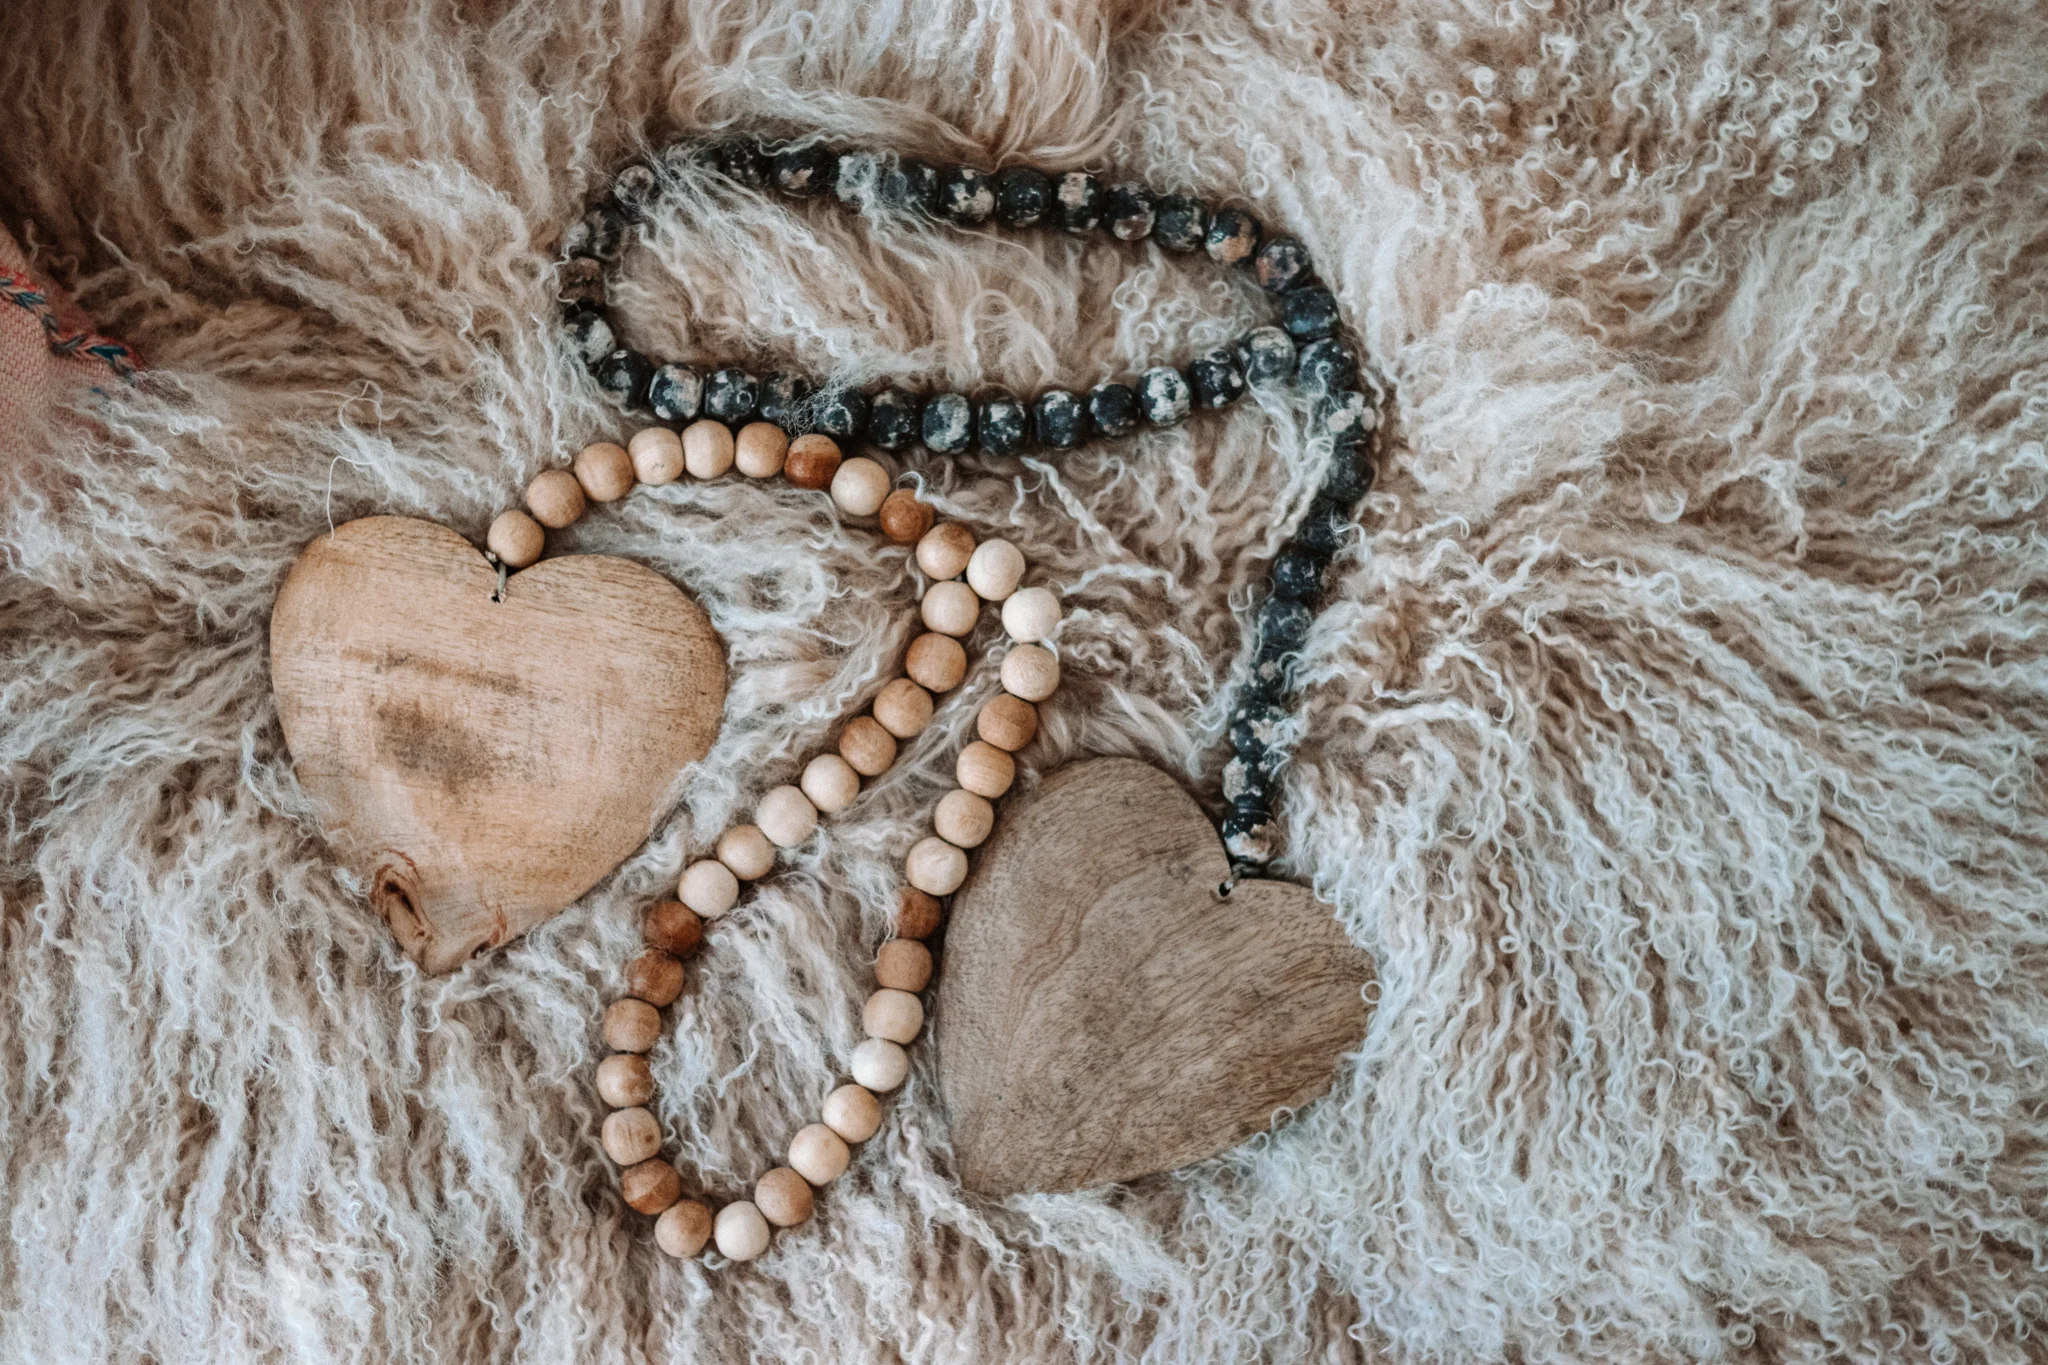 Heart Antiqued Wood Bead Strand